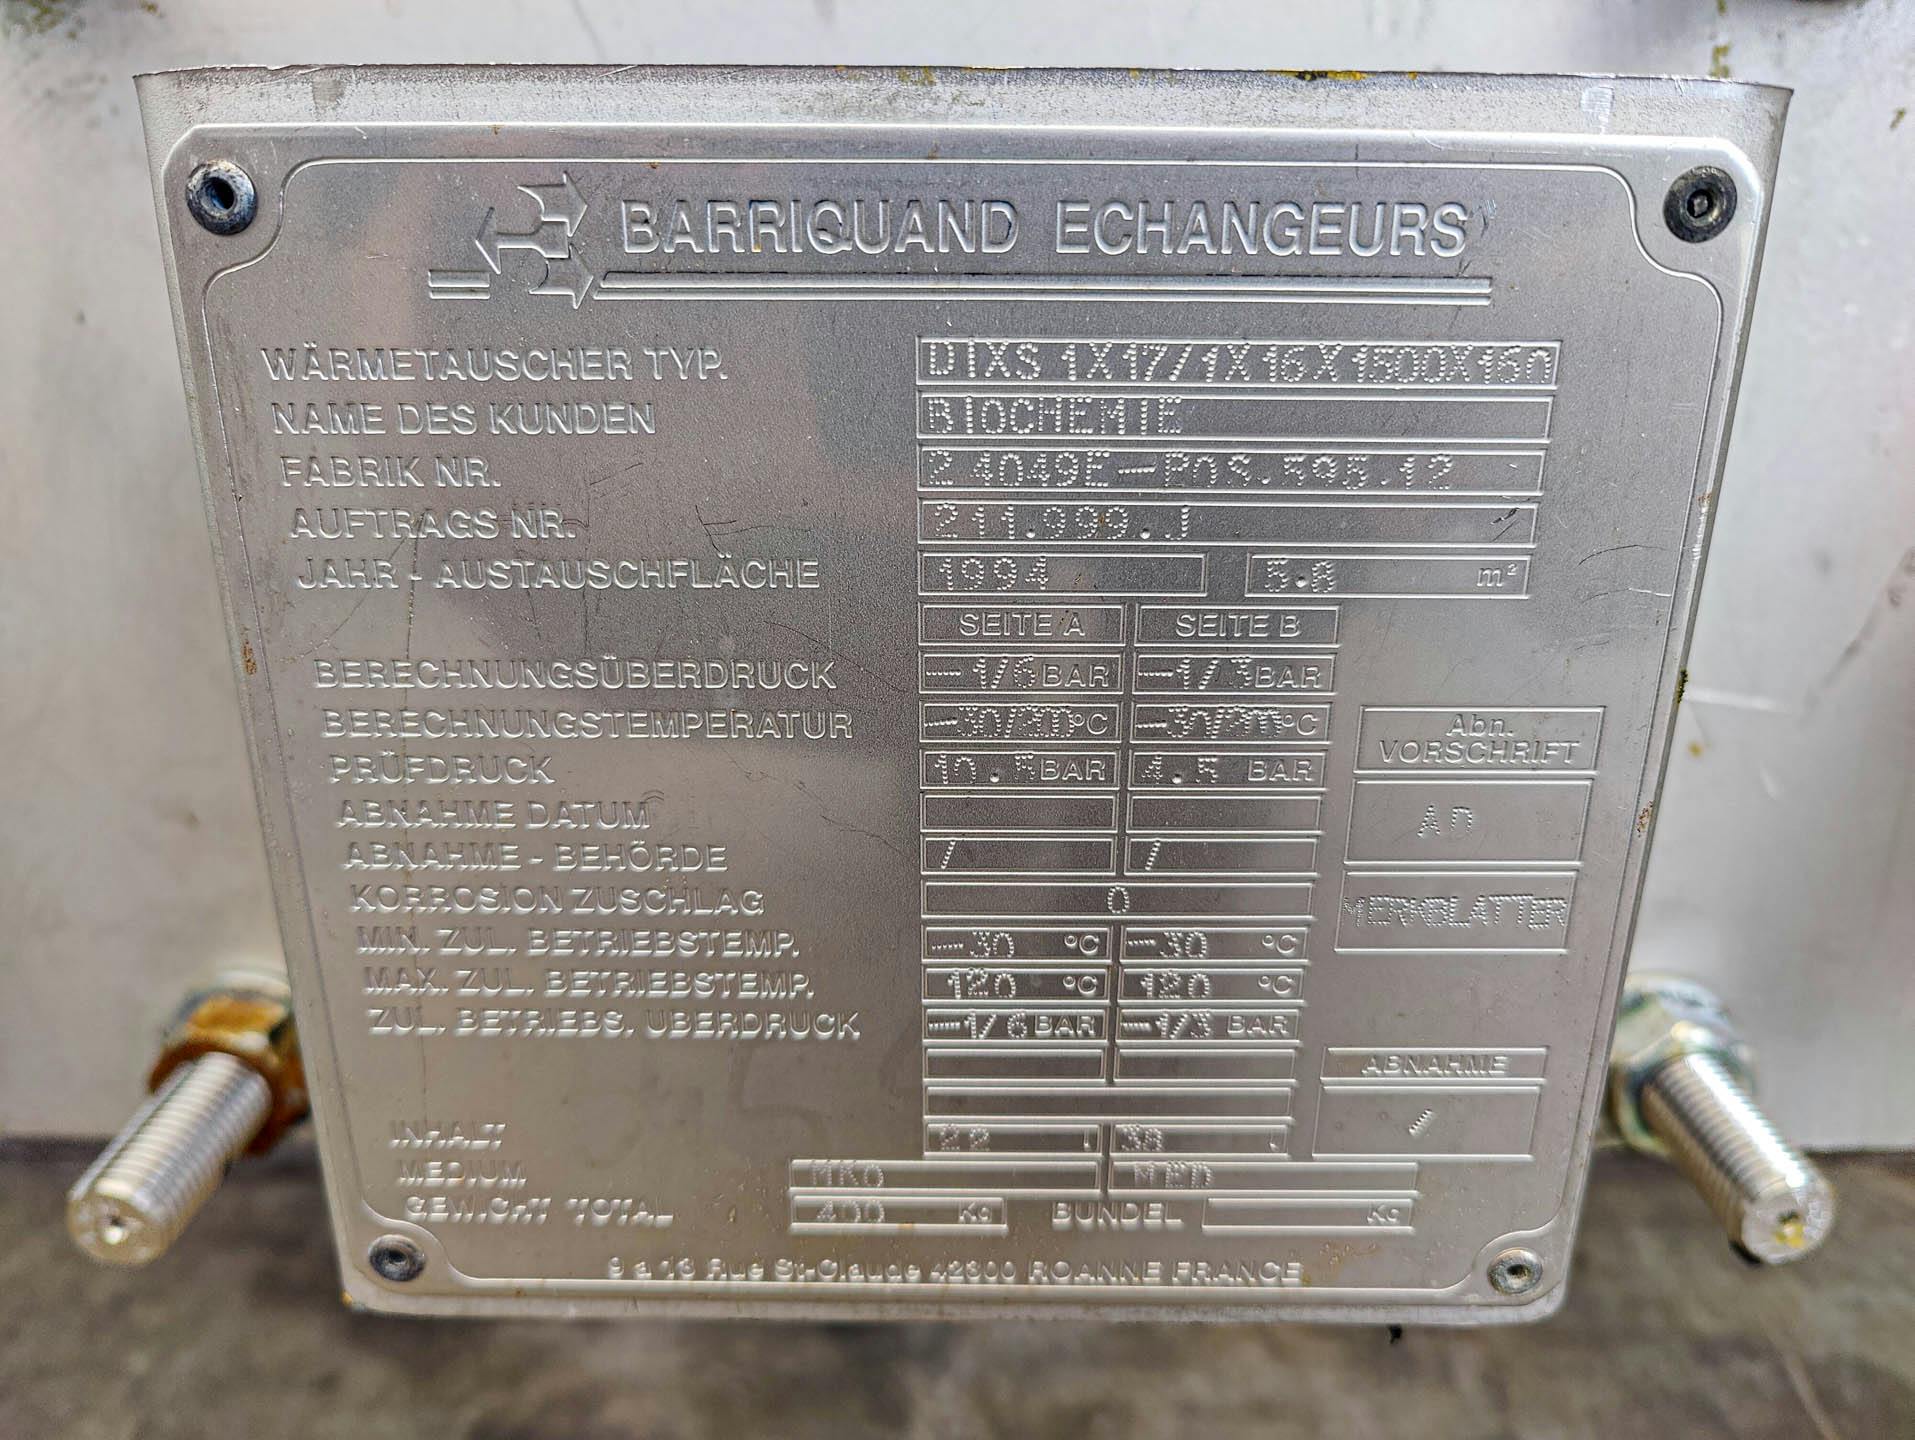 Barriquand Platular DIXS 1x17/1x16/1500/160 welded plate heat exchanger - Пластинчатый теплообменник - image 6